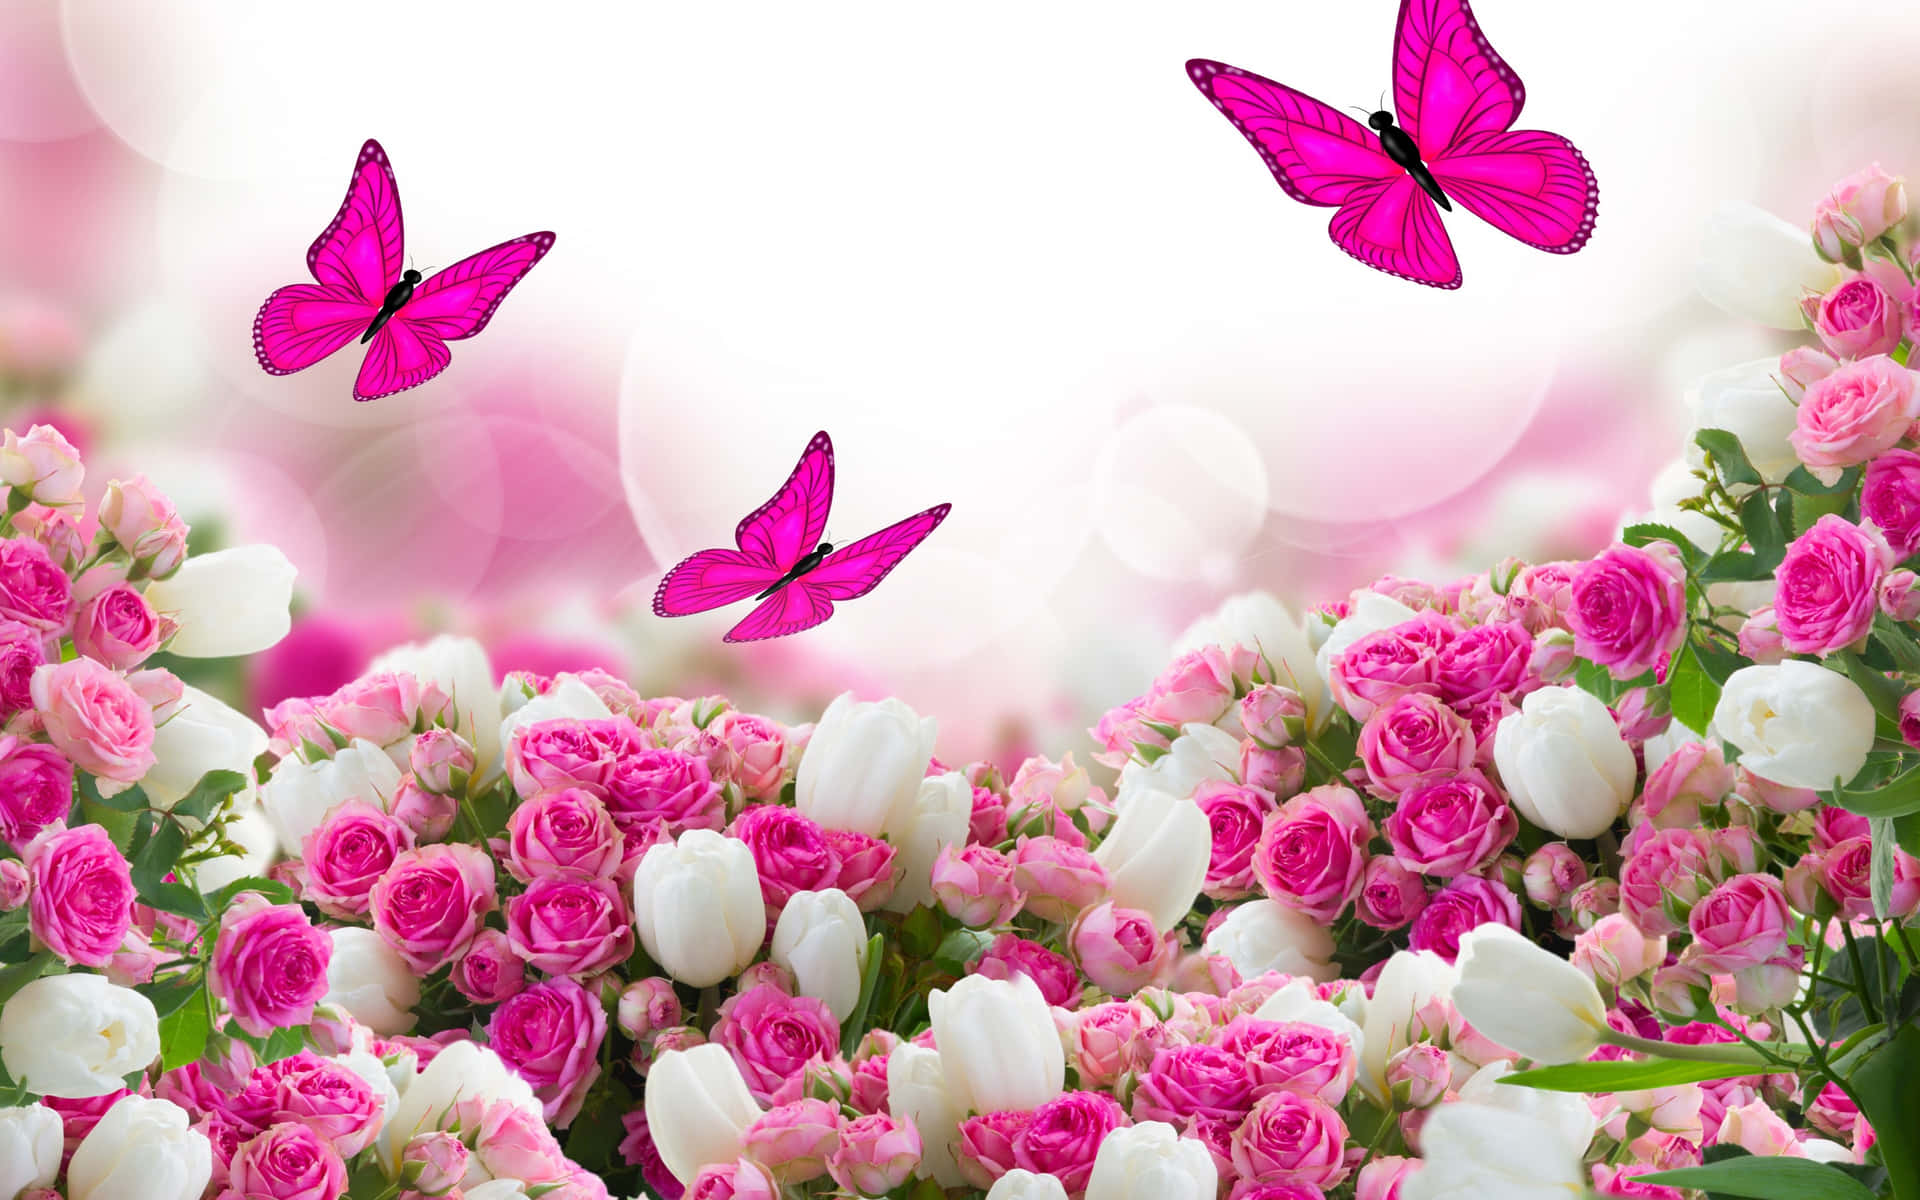 Enchanting Pink Rose in Full Bloom